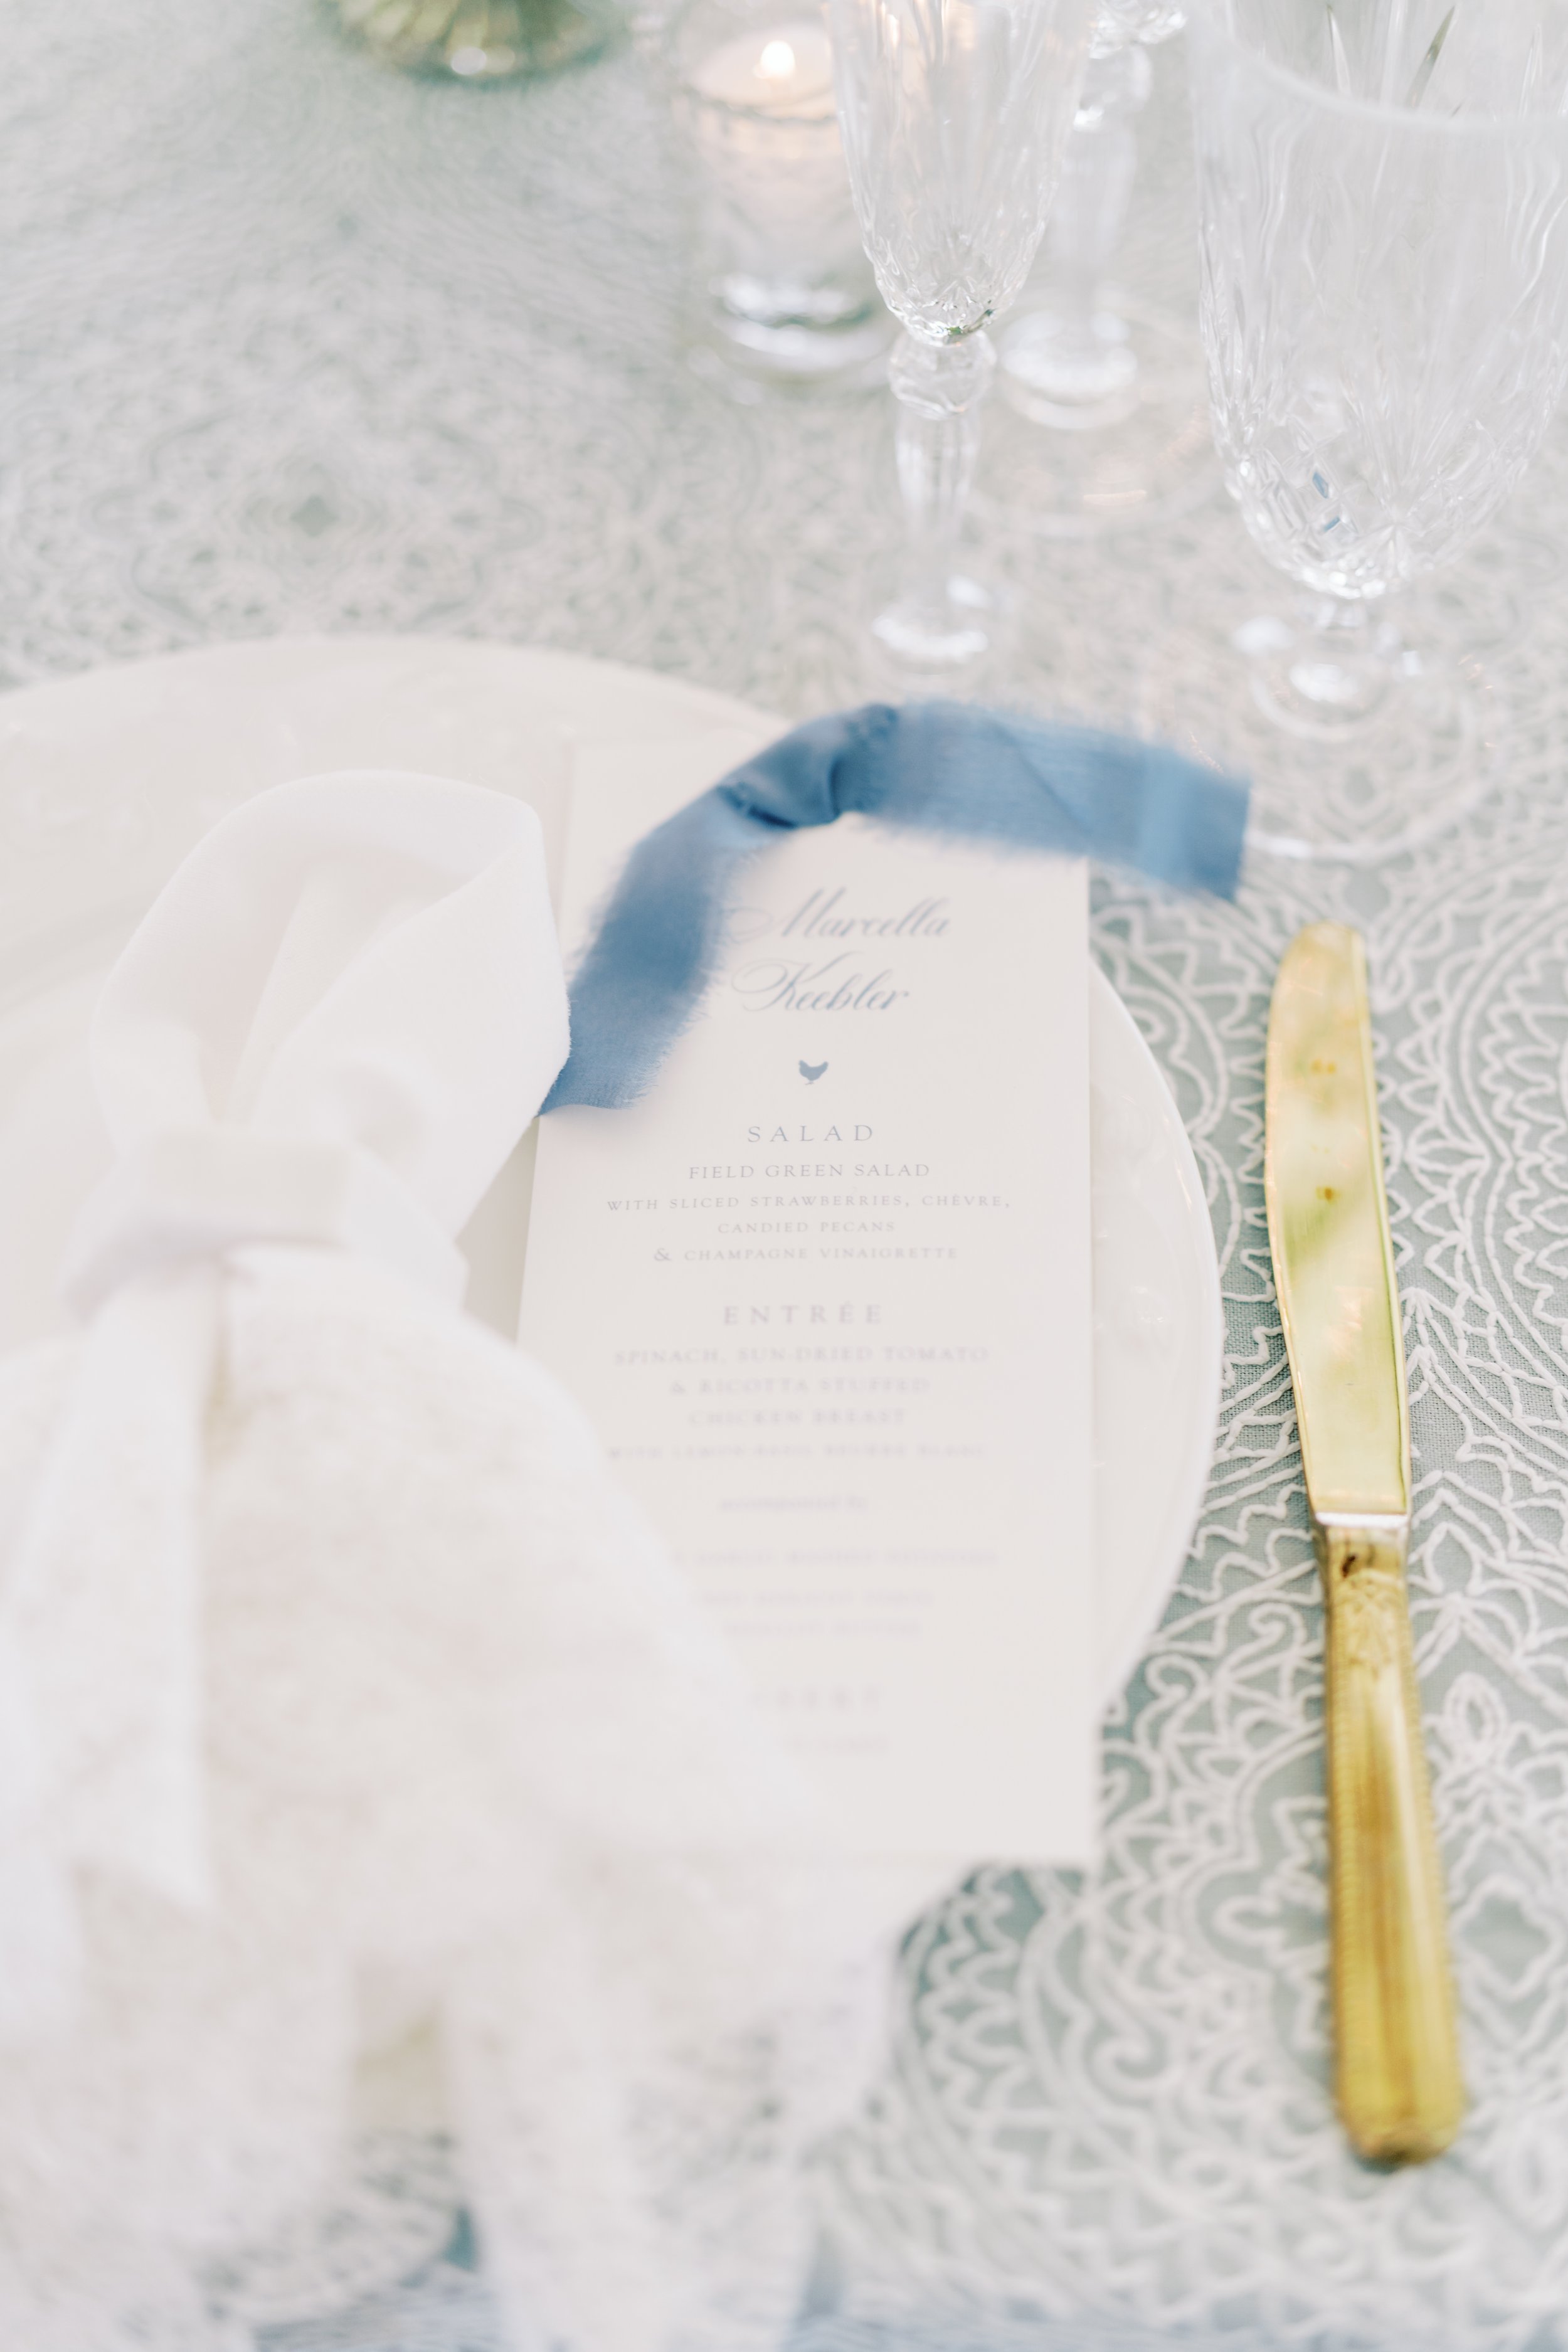 Pink-Champagne-Designs-wedding-reception-stationery-details